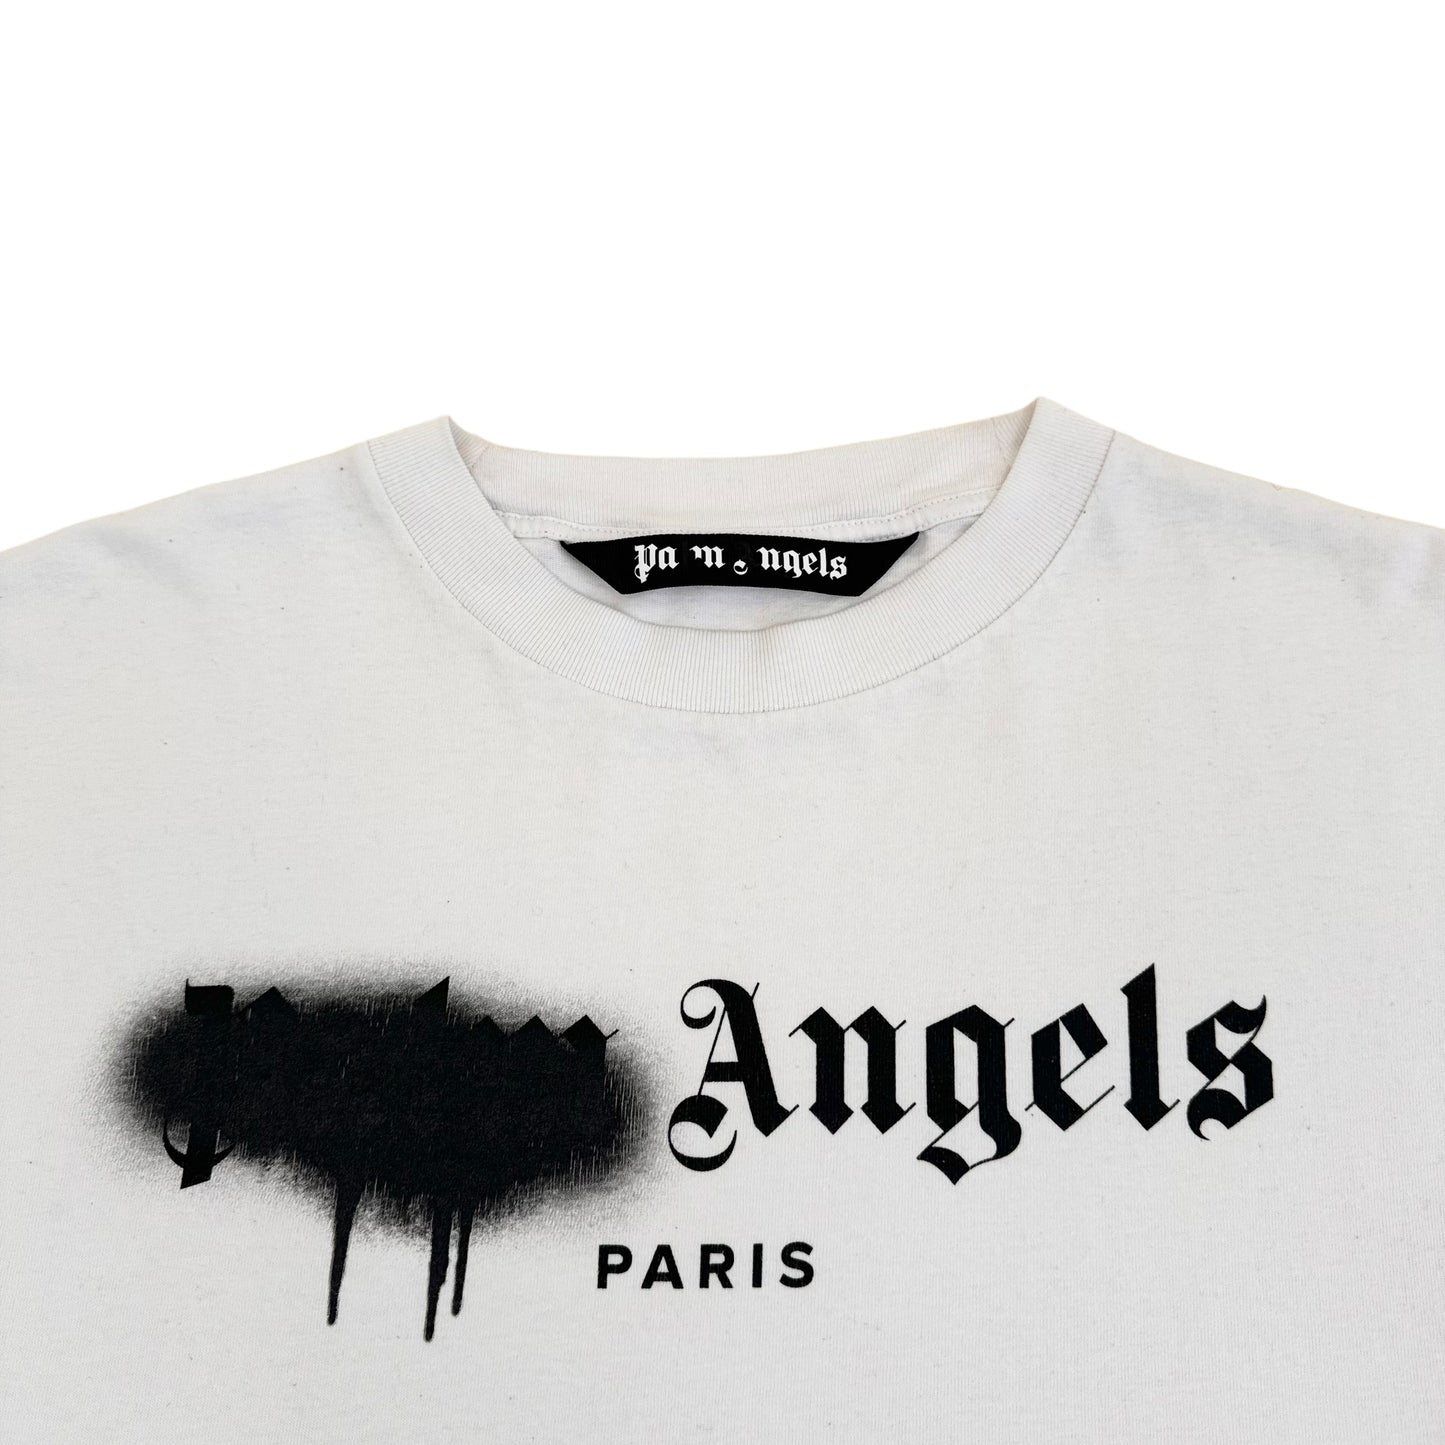 PALM ANGELS SPRAY PAINT PARIS T-SHIRT WHITE XL